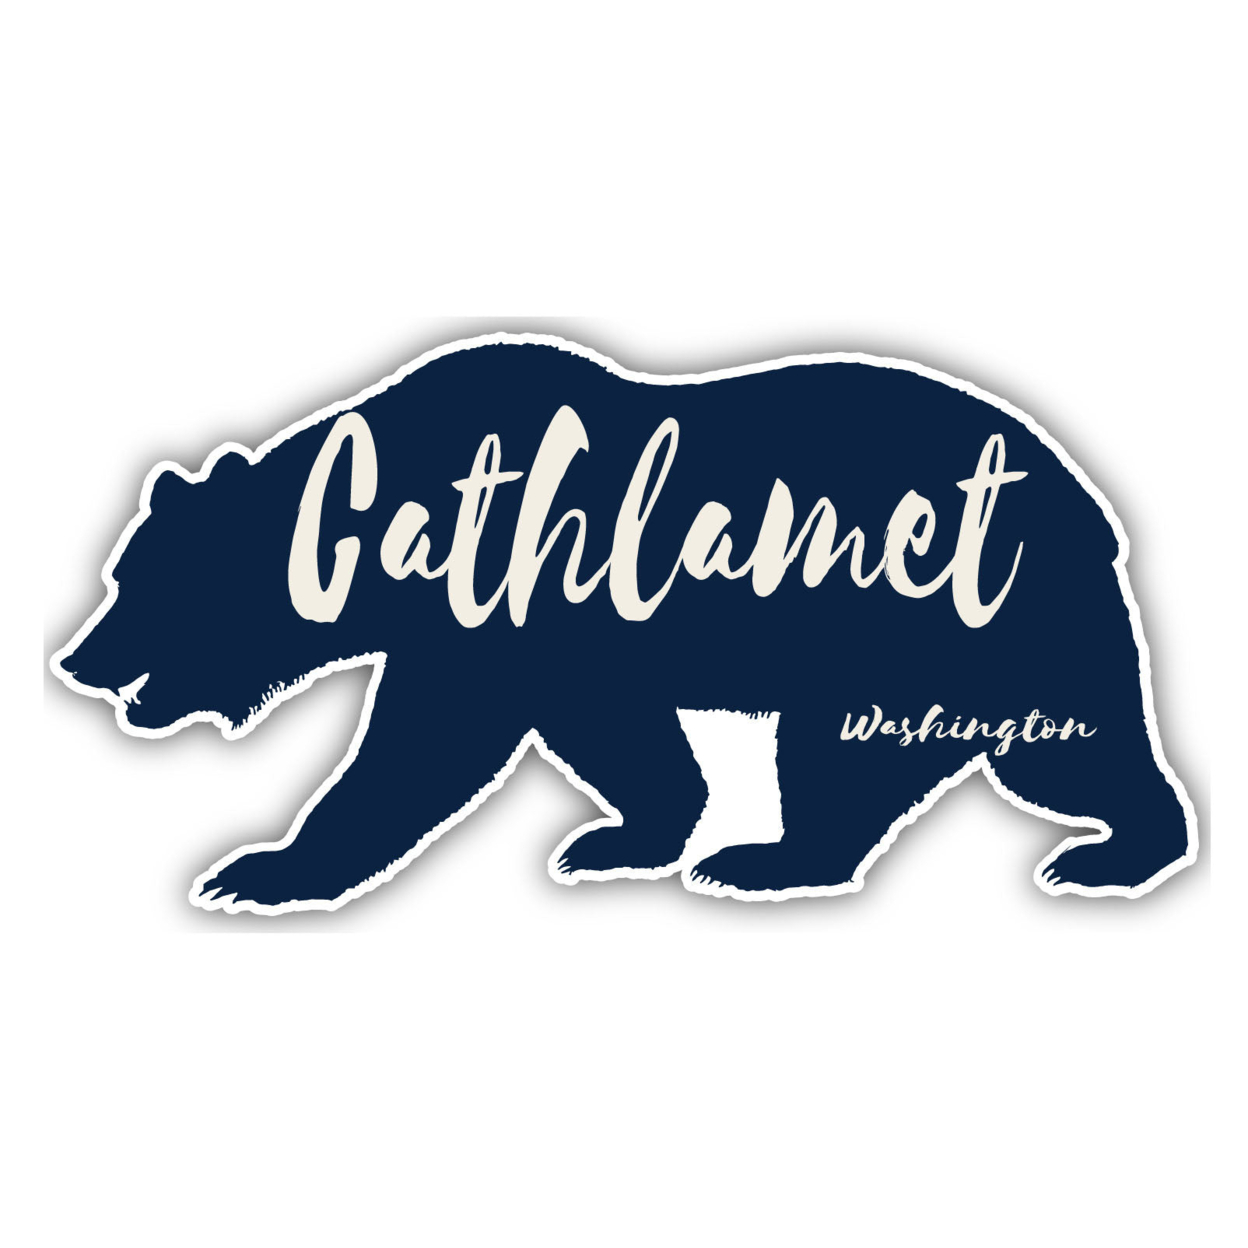 Cathlamet Washington Souvenir Decorative Stickers (Choose Theme And Size) - Single Unit, 2-Inch, Bear